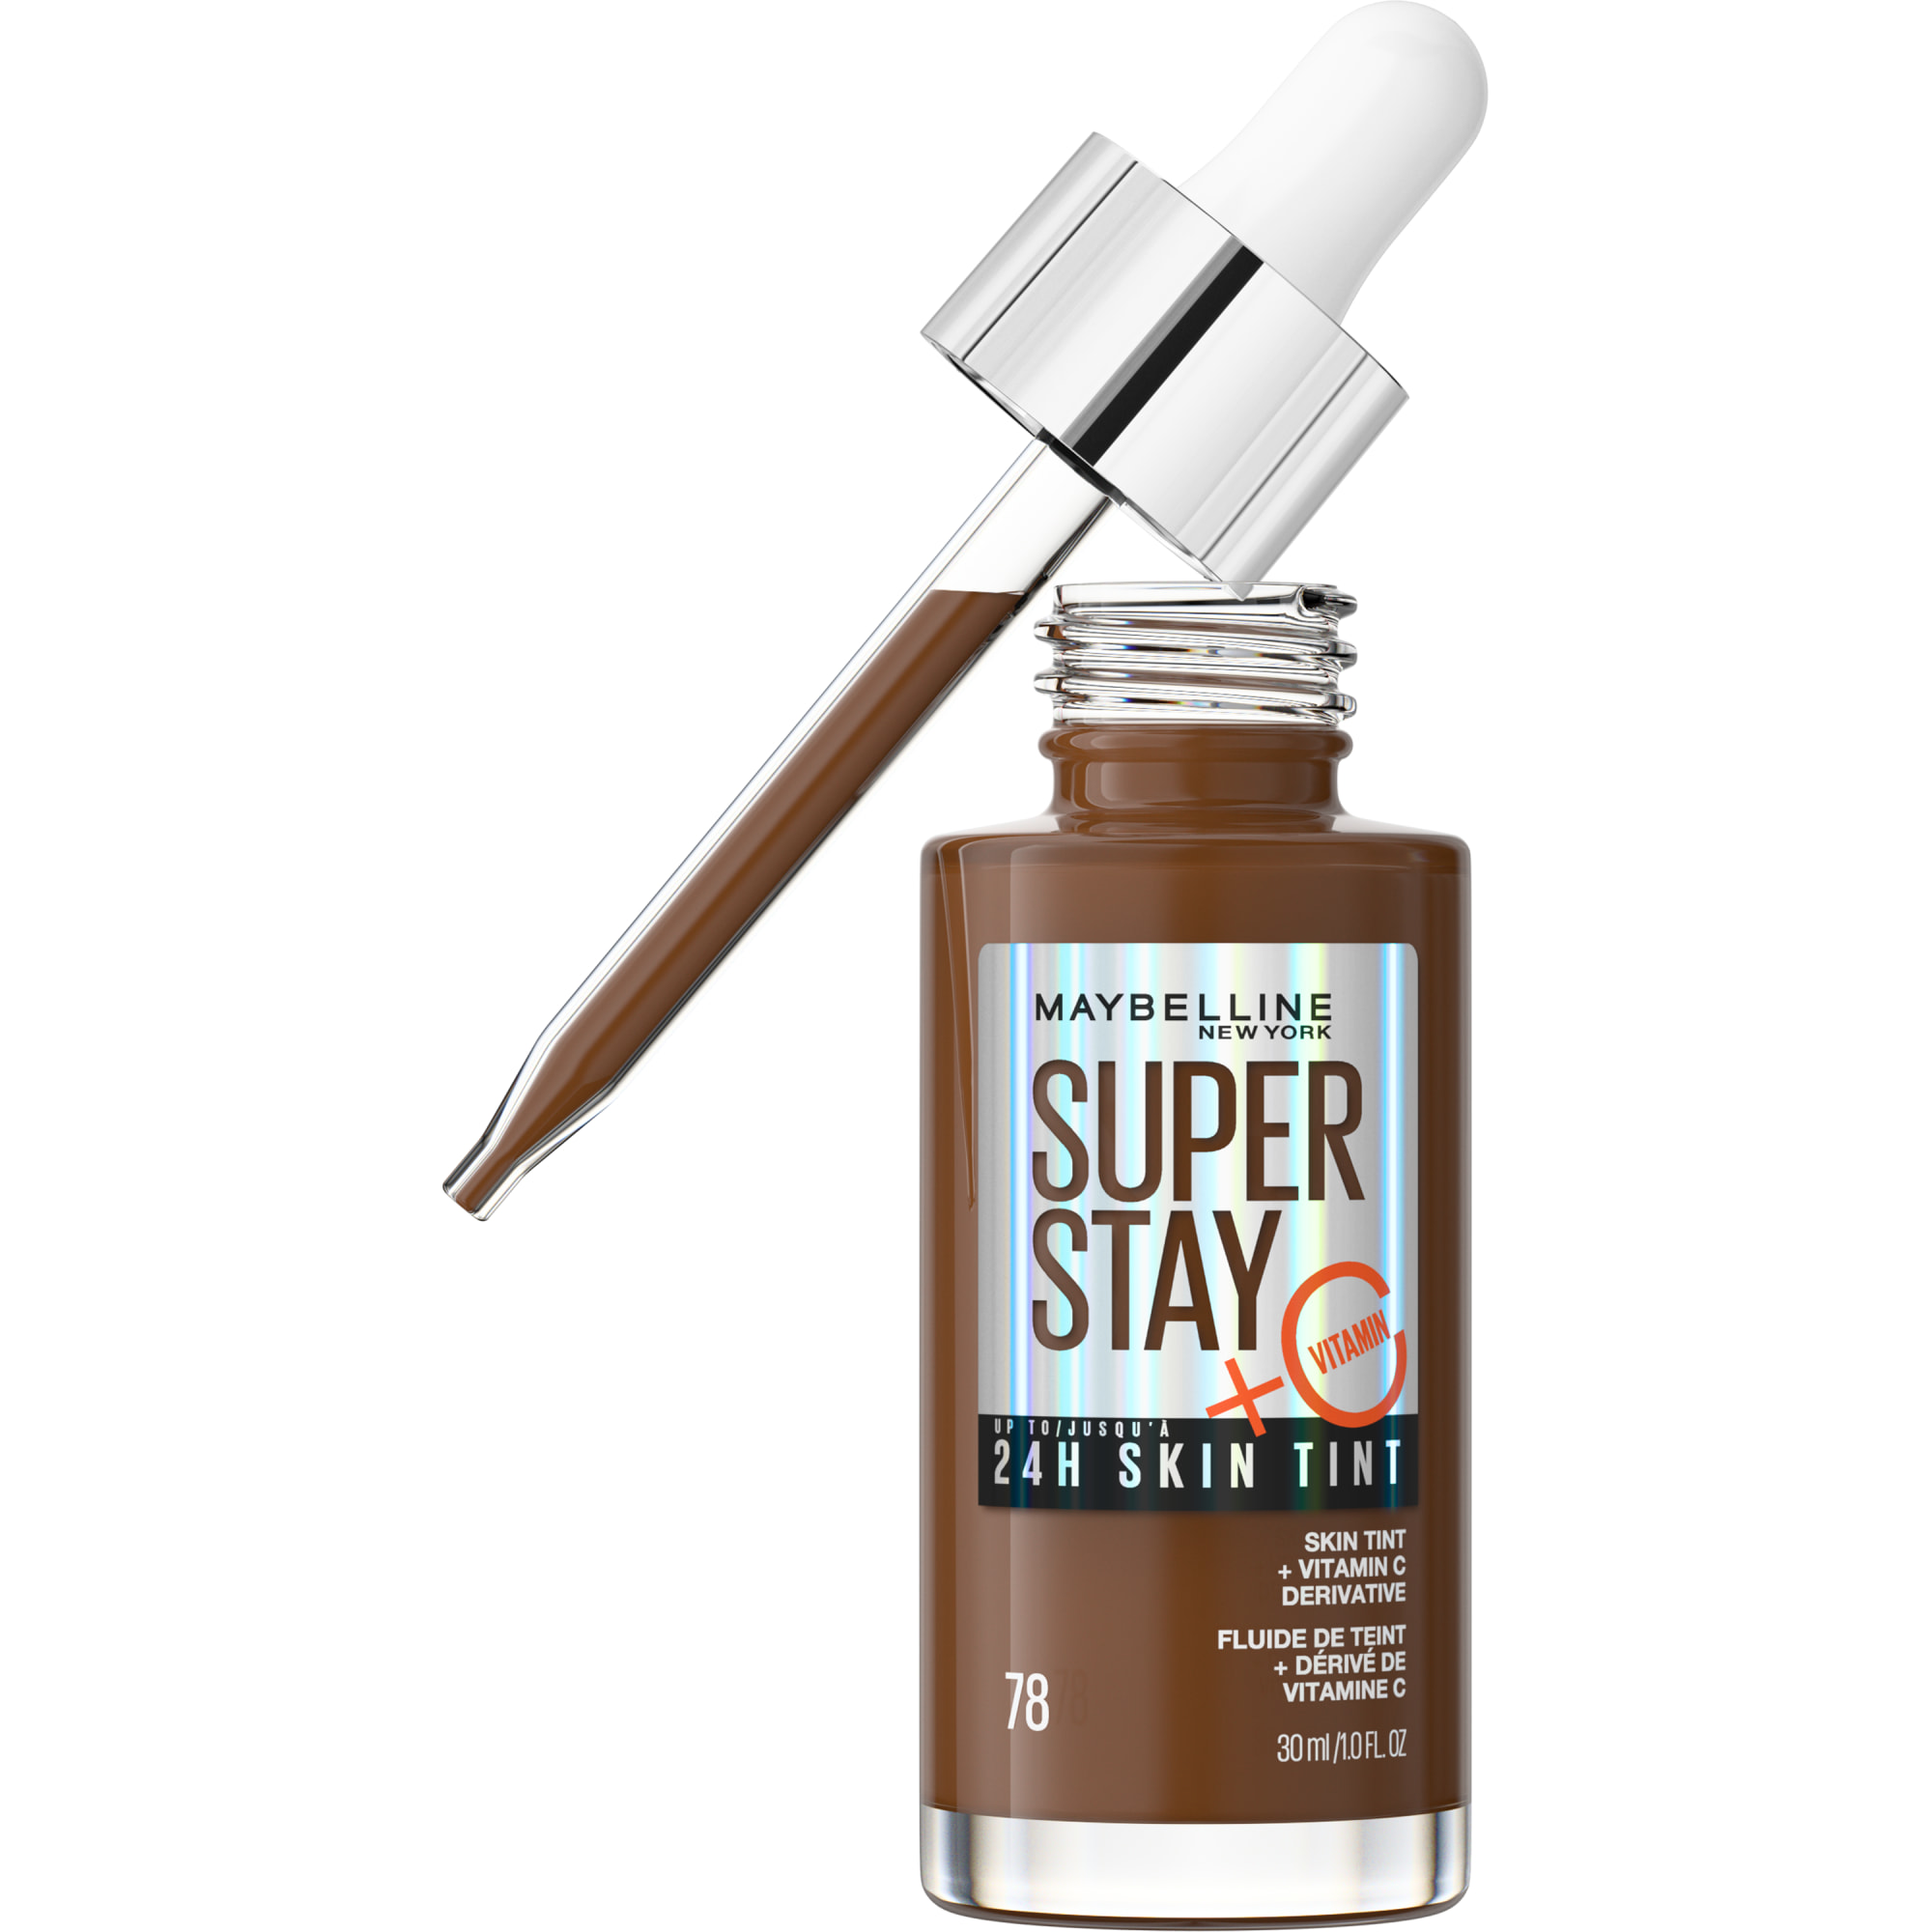 Fluide de teint Superstay 24h Skin Tint 78